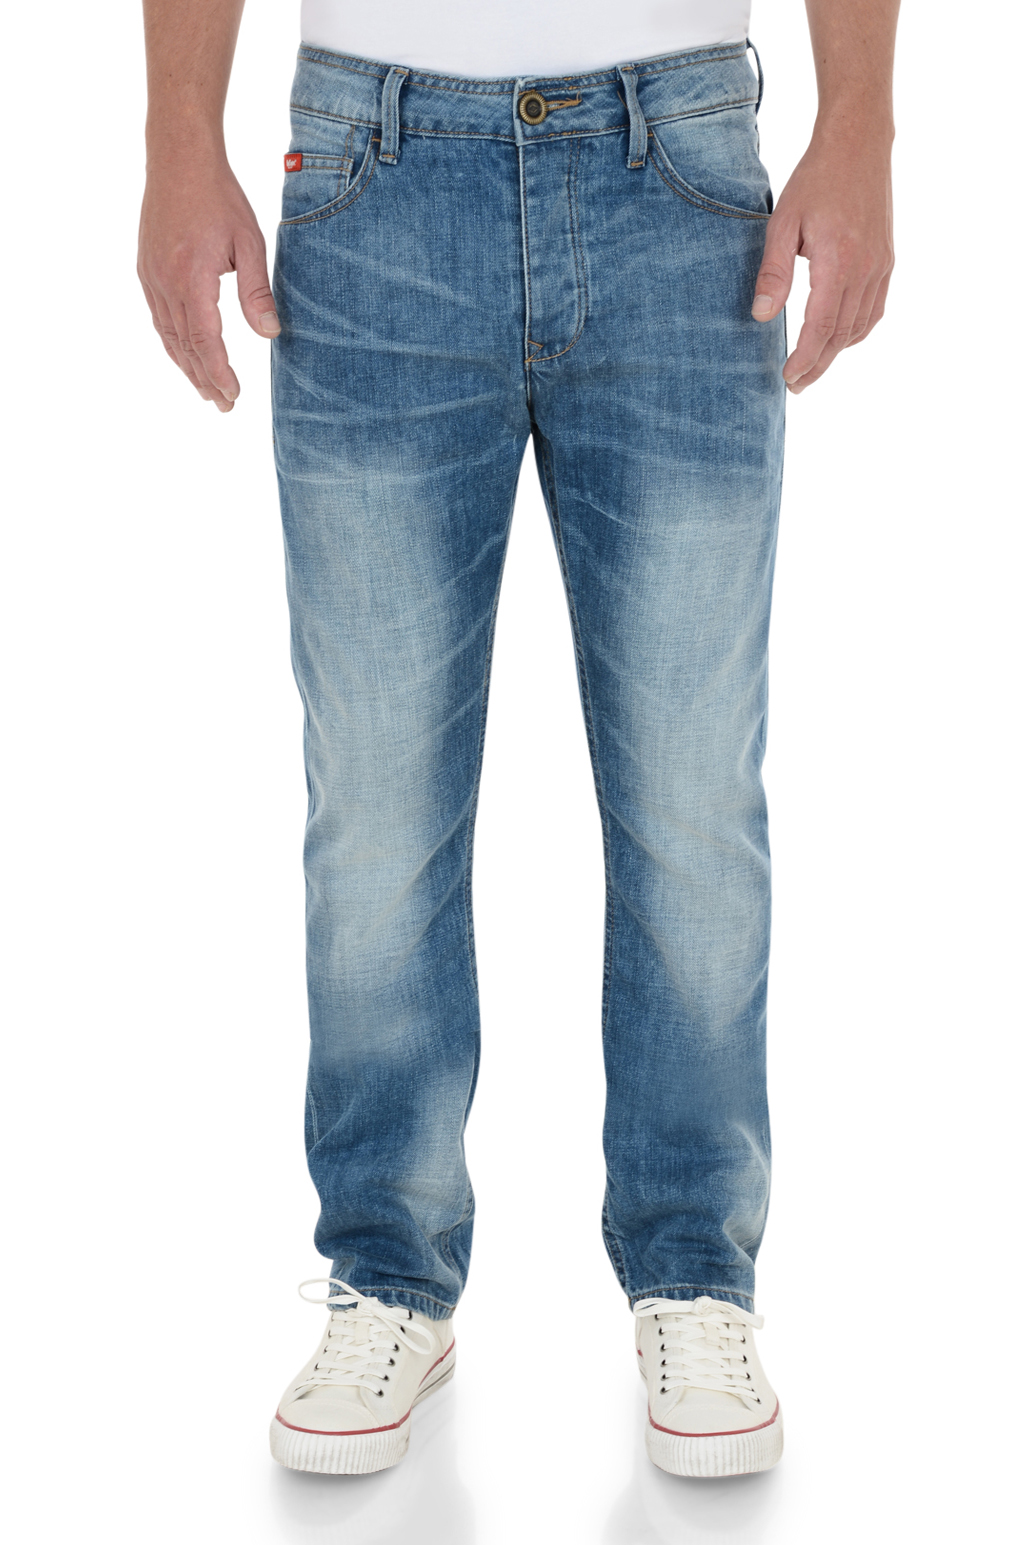 Lee Cooper Jeans Men’s New Vintage Faded Denim Pants Straight Slim ...